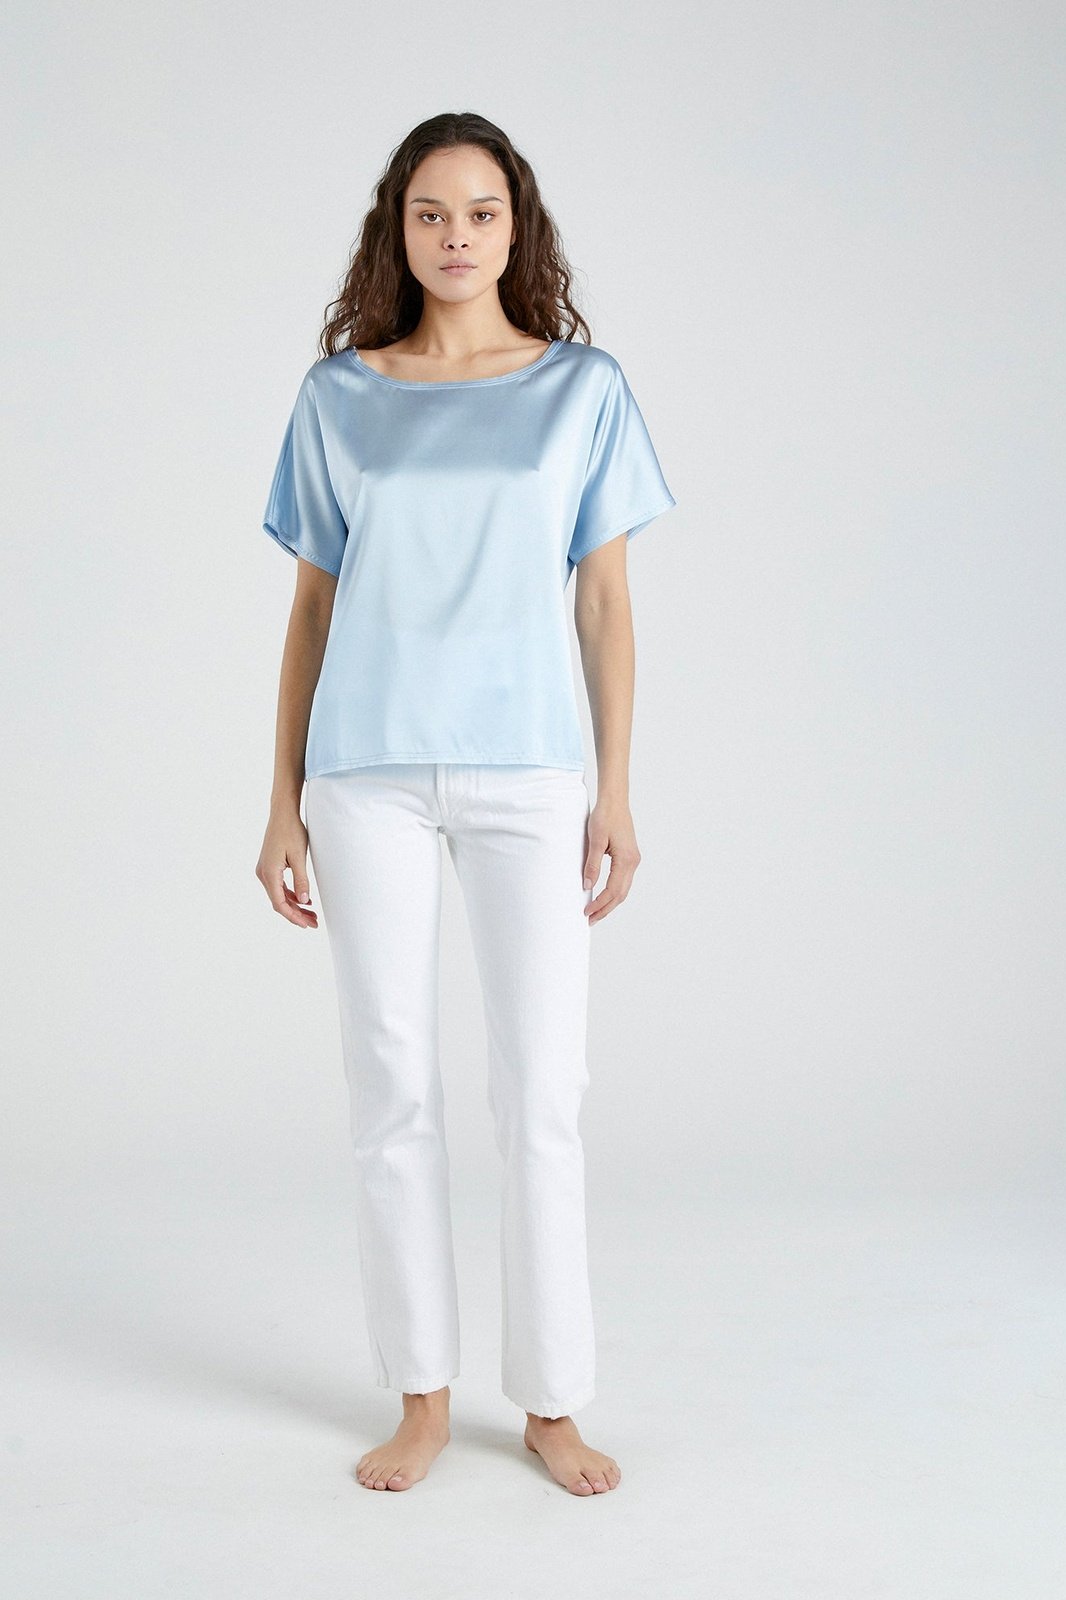 +Beryll Silk Shirt Erica | Baby Blue - +Beryll Silk Shirt Erica | Baby Blue - +Beryll Worn By Good People